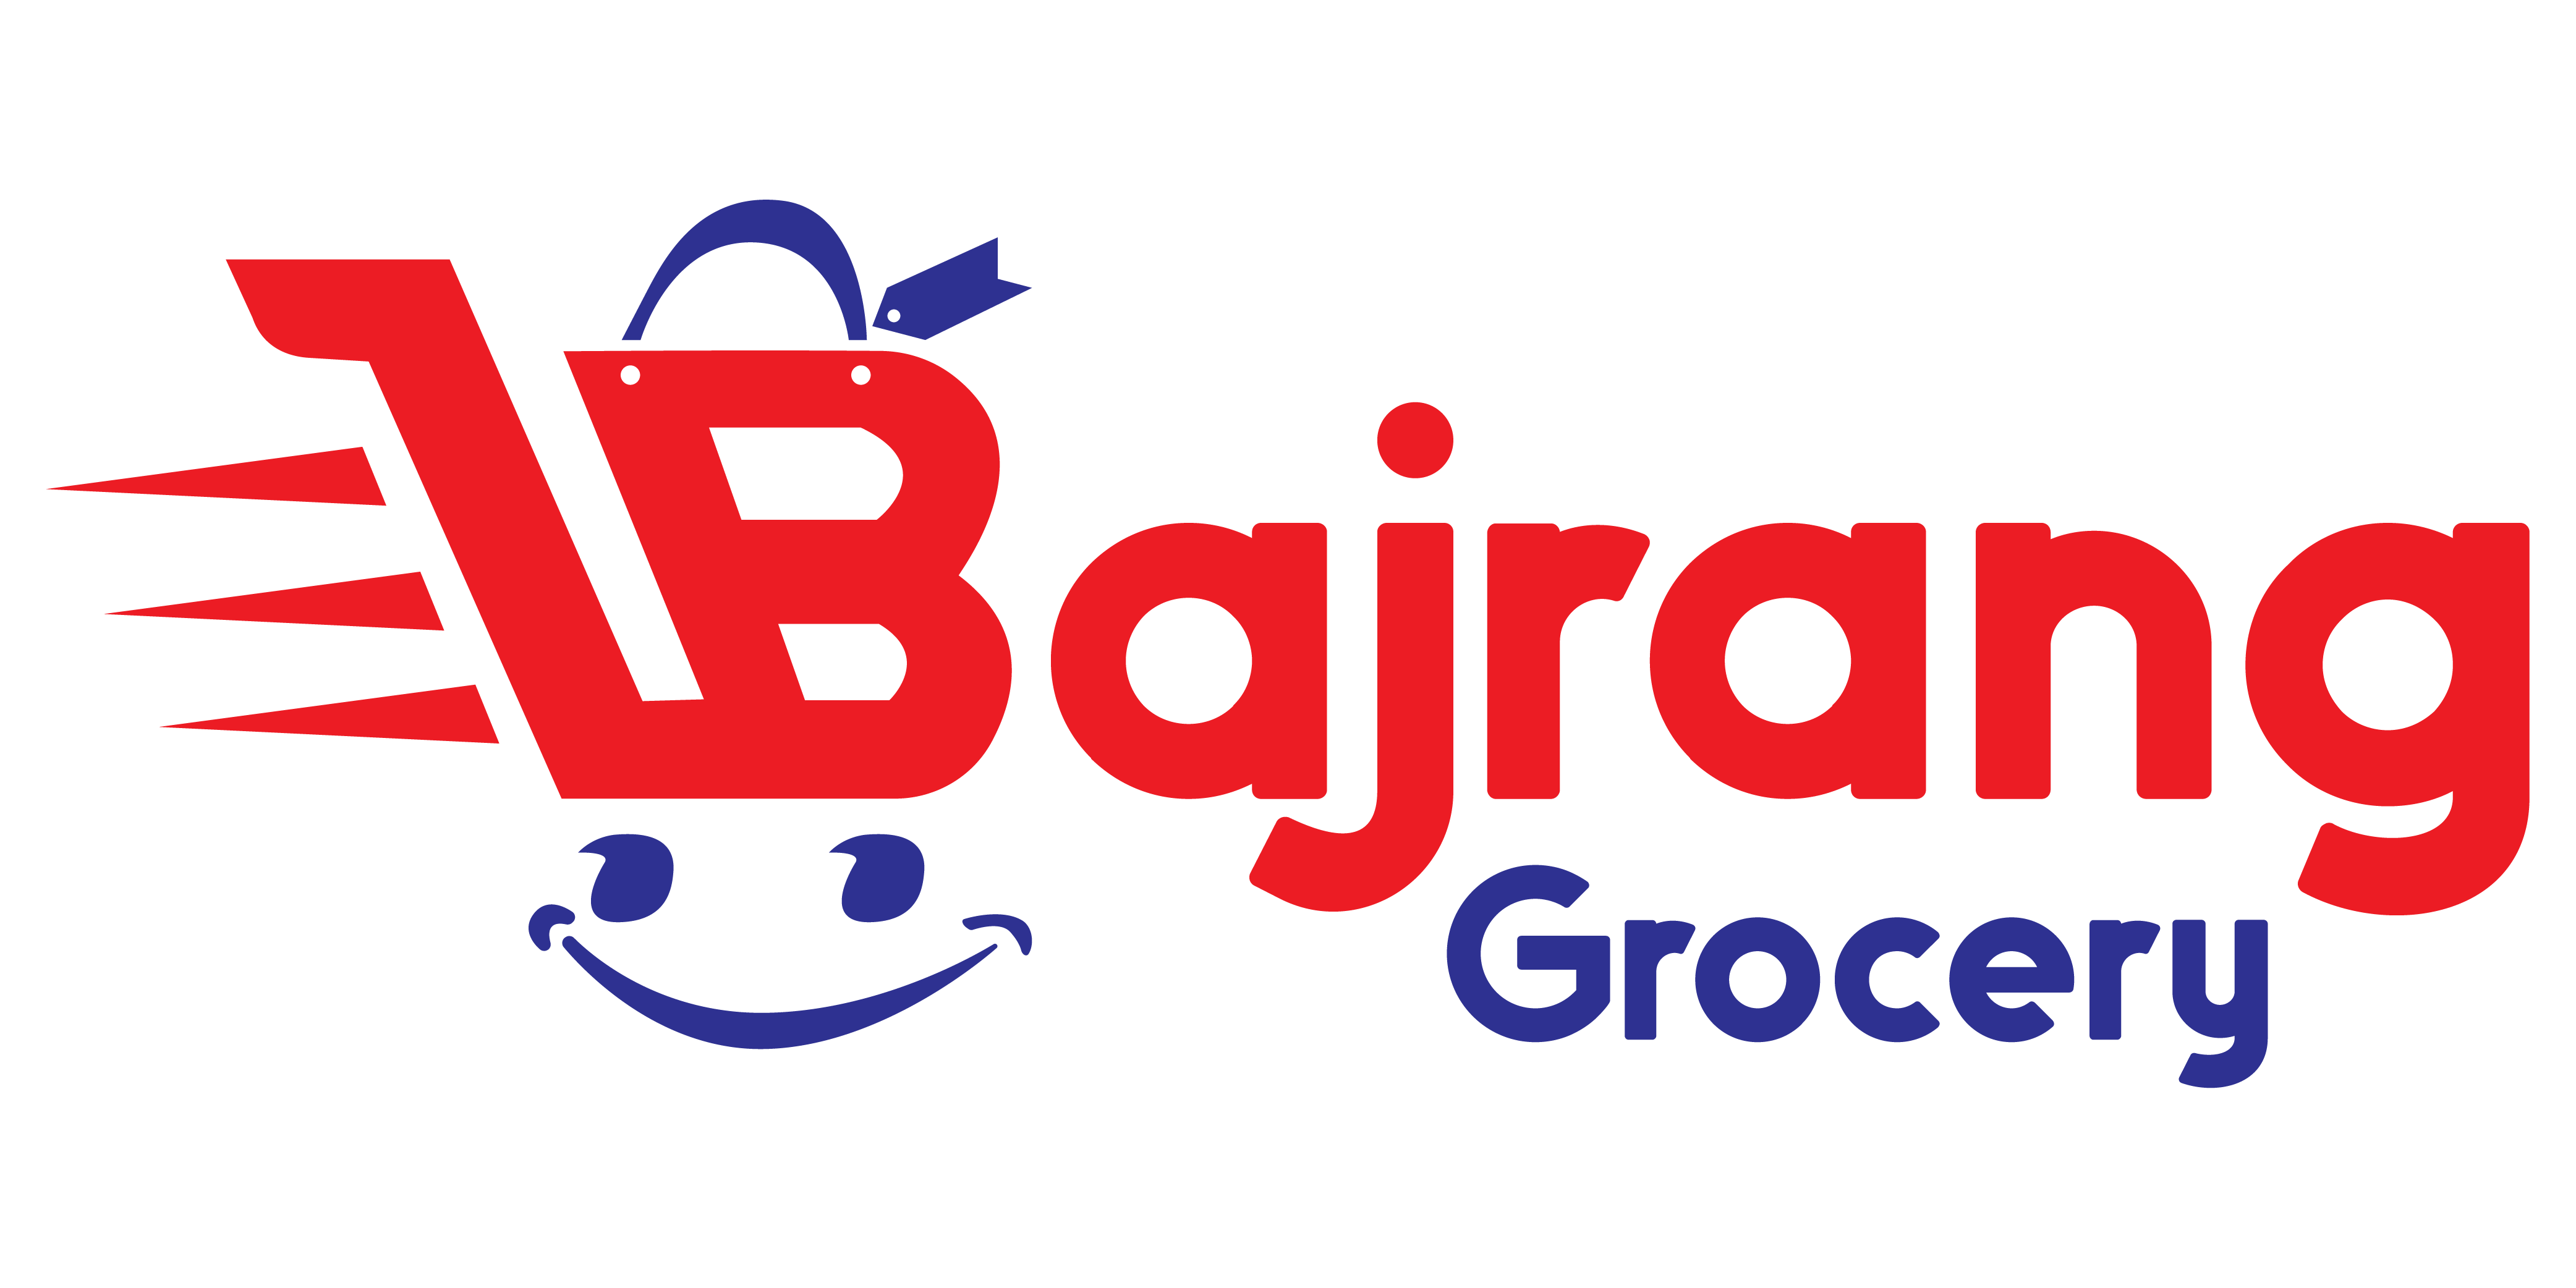 Best Grocery store in Rajkot | Bajrang Grocery | Top Grocery Store in Rajkot | Online Grocery in Rajkot | hartu fartu kariyanu | હરતું ફરતું ઓનલાઇન કરિયાણું